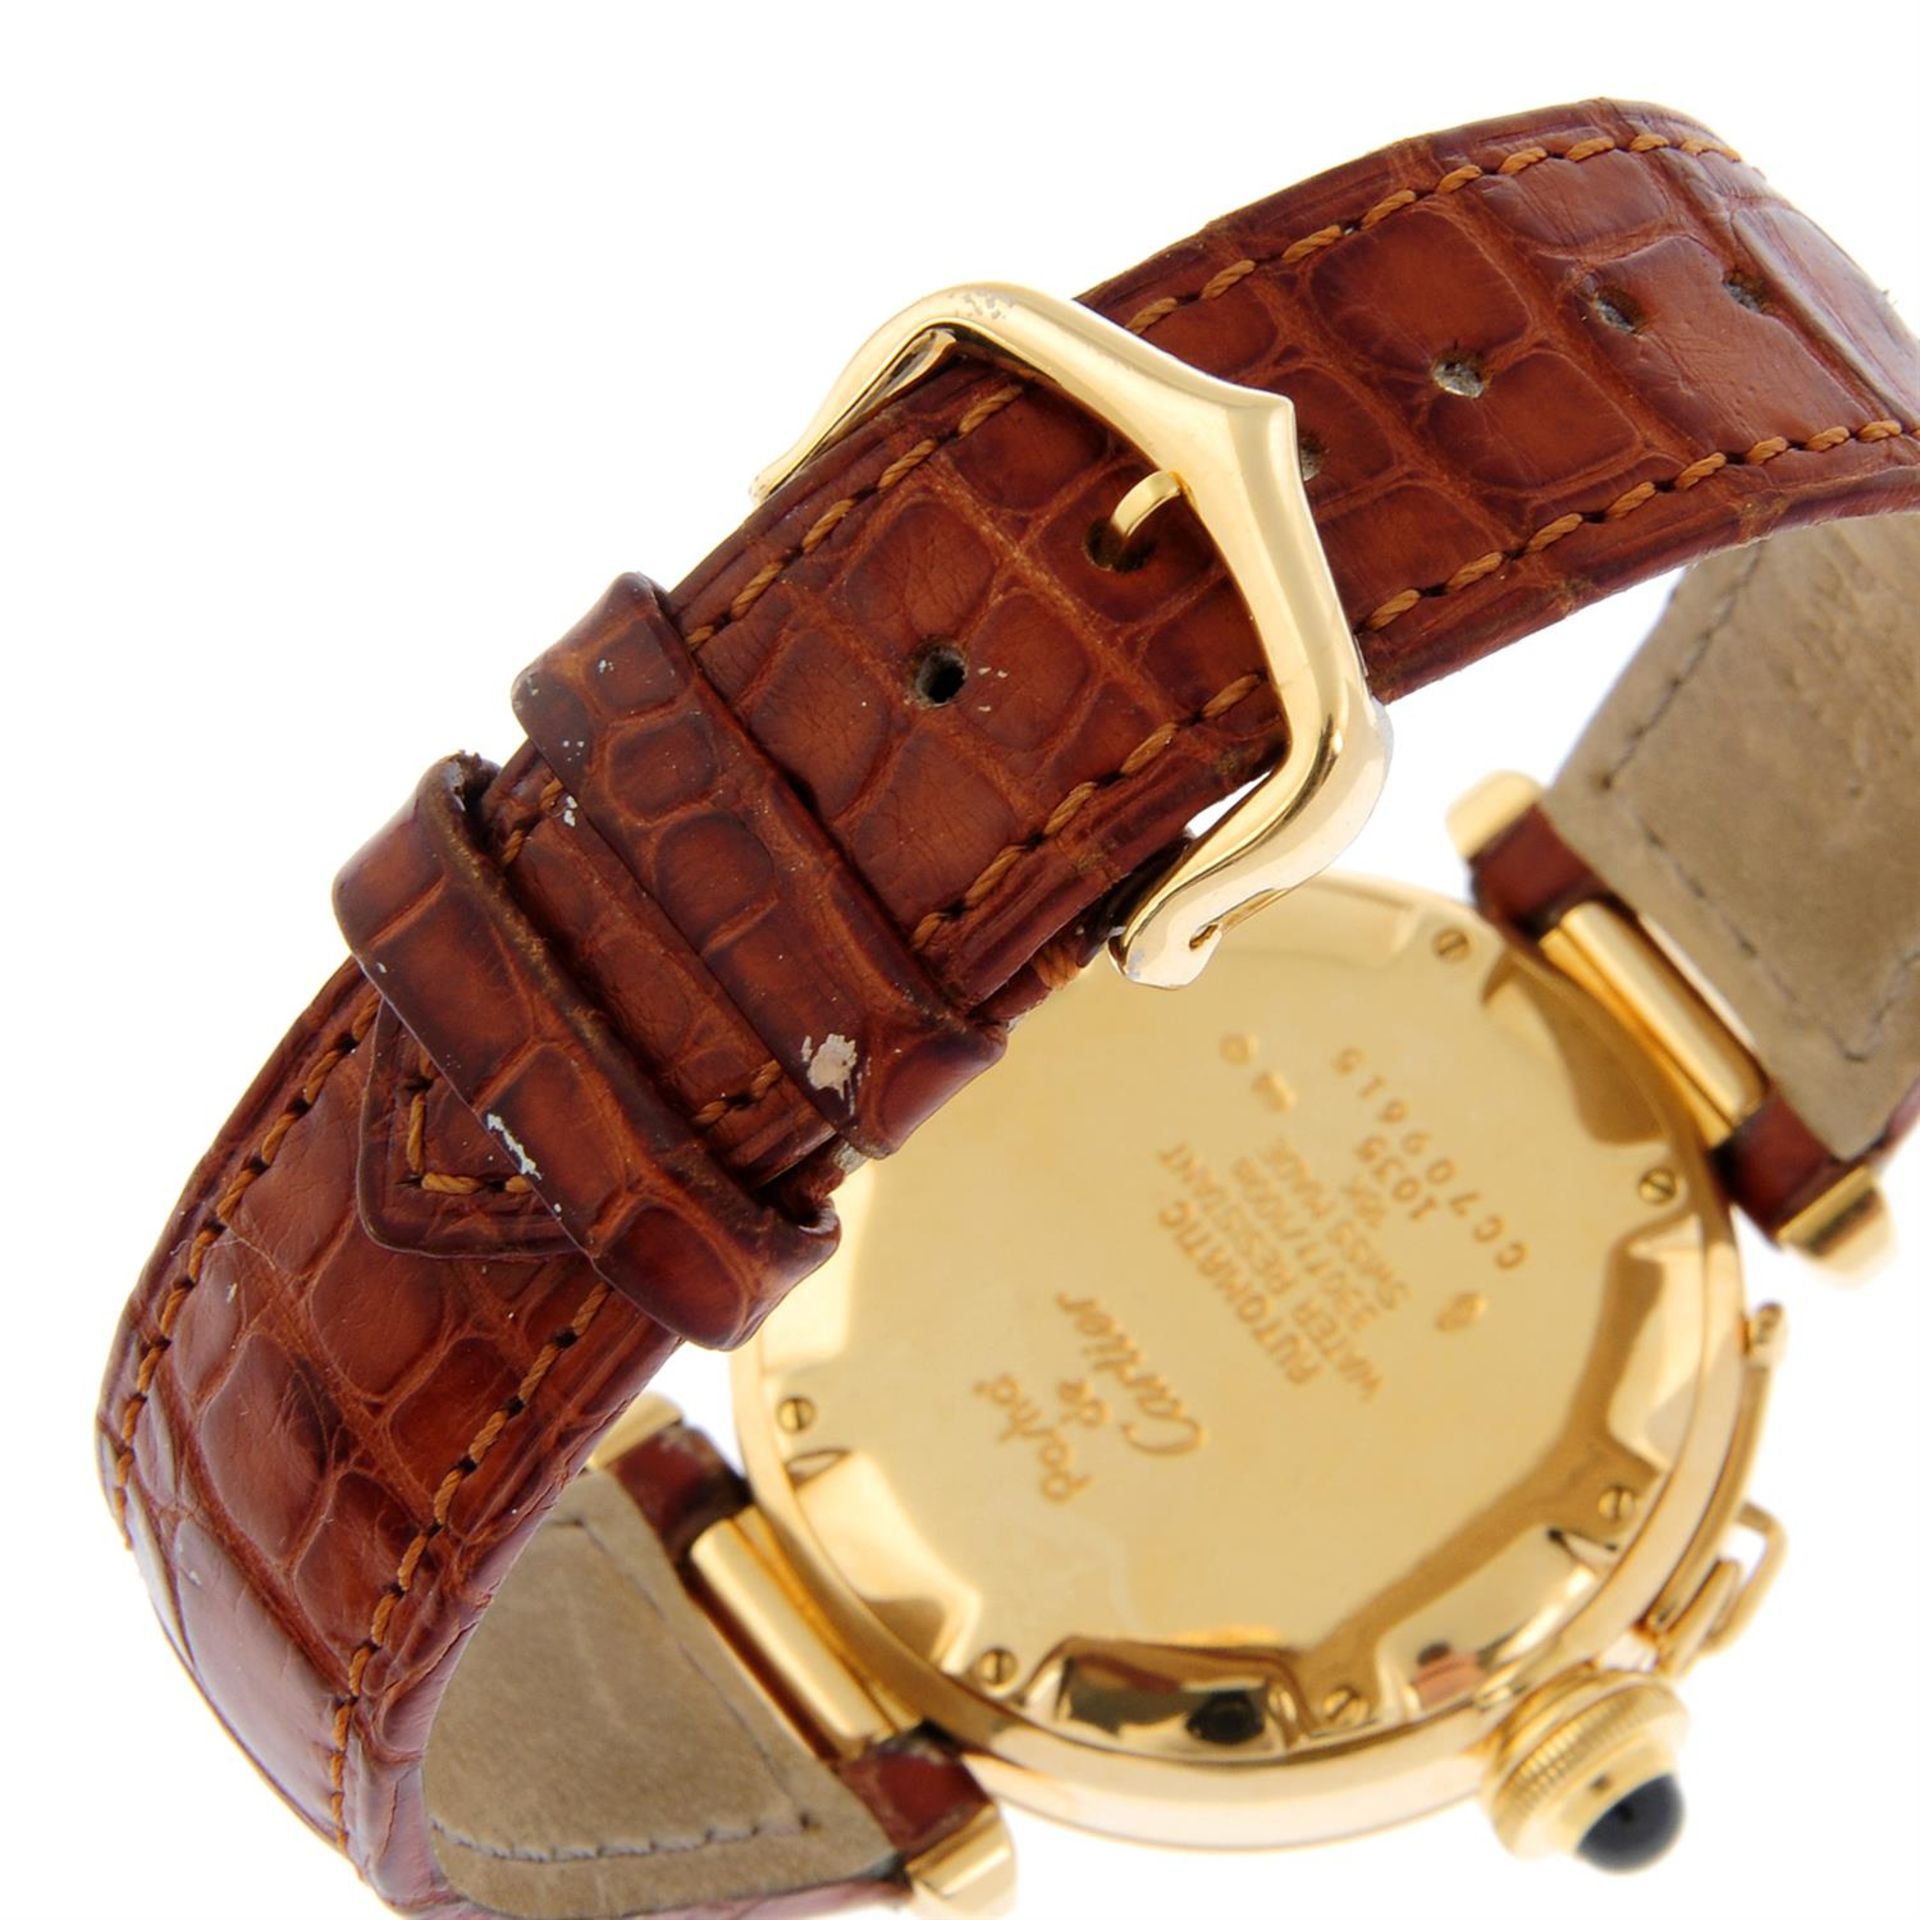 CARTIER - an 18ct yellow gold Pasha wrist watch, 35mm. - Image 2 of 6